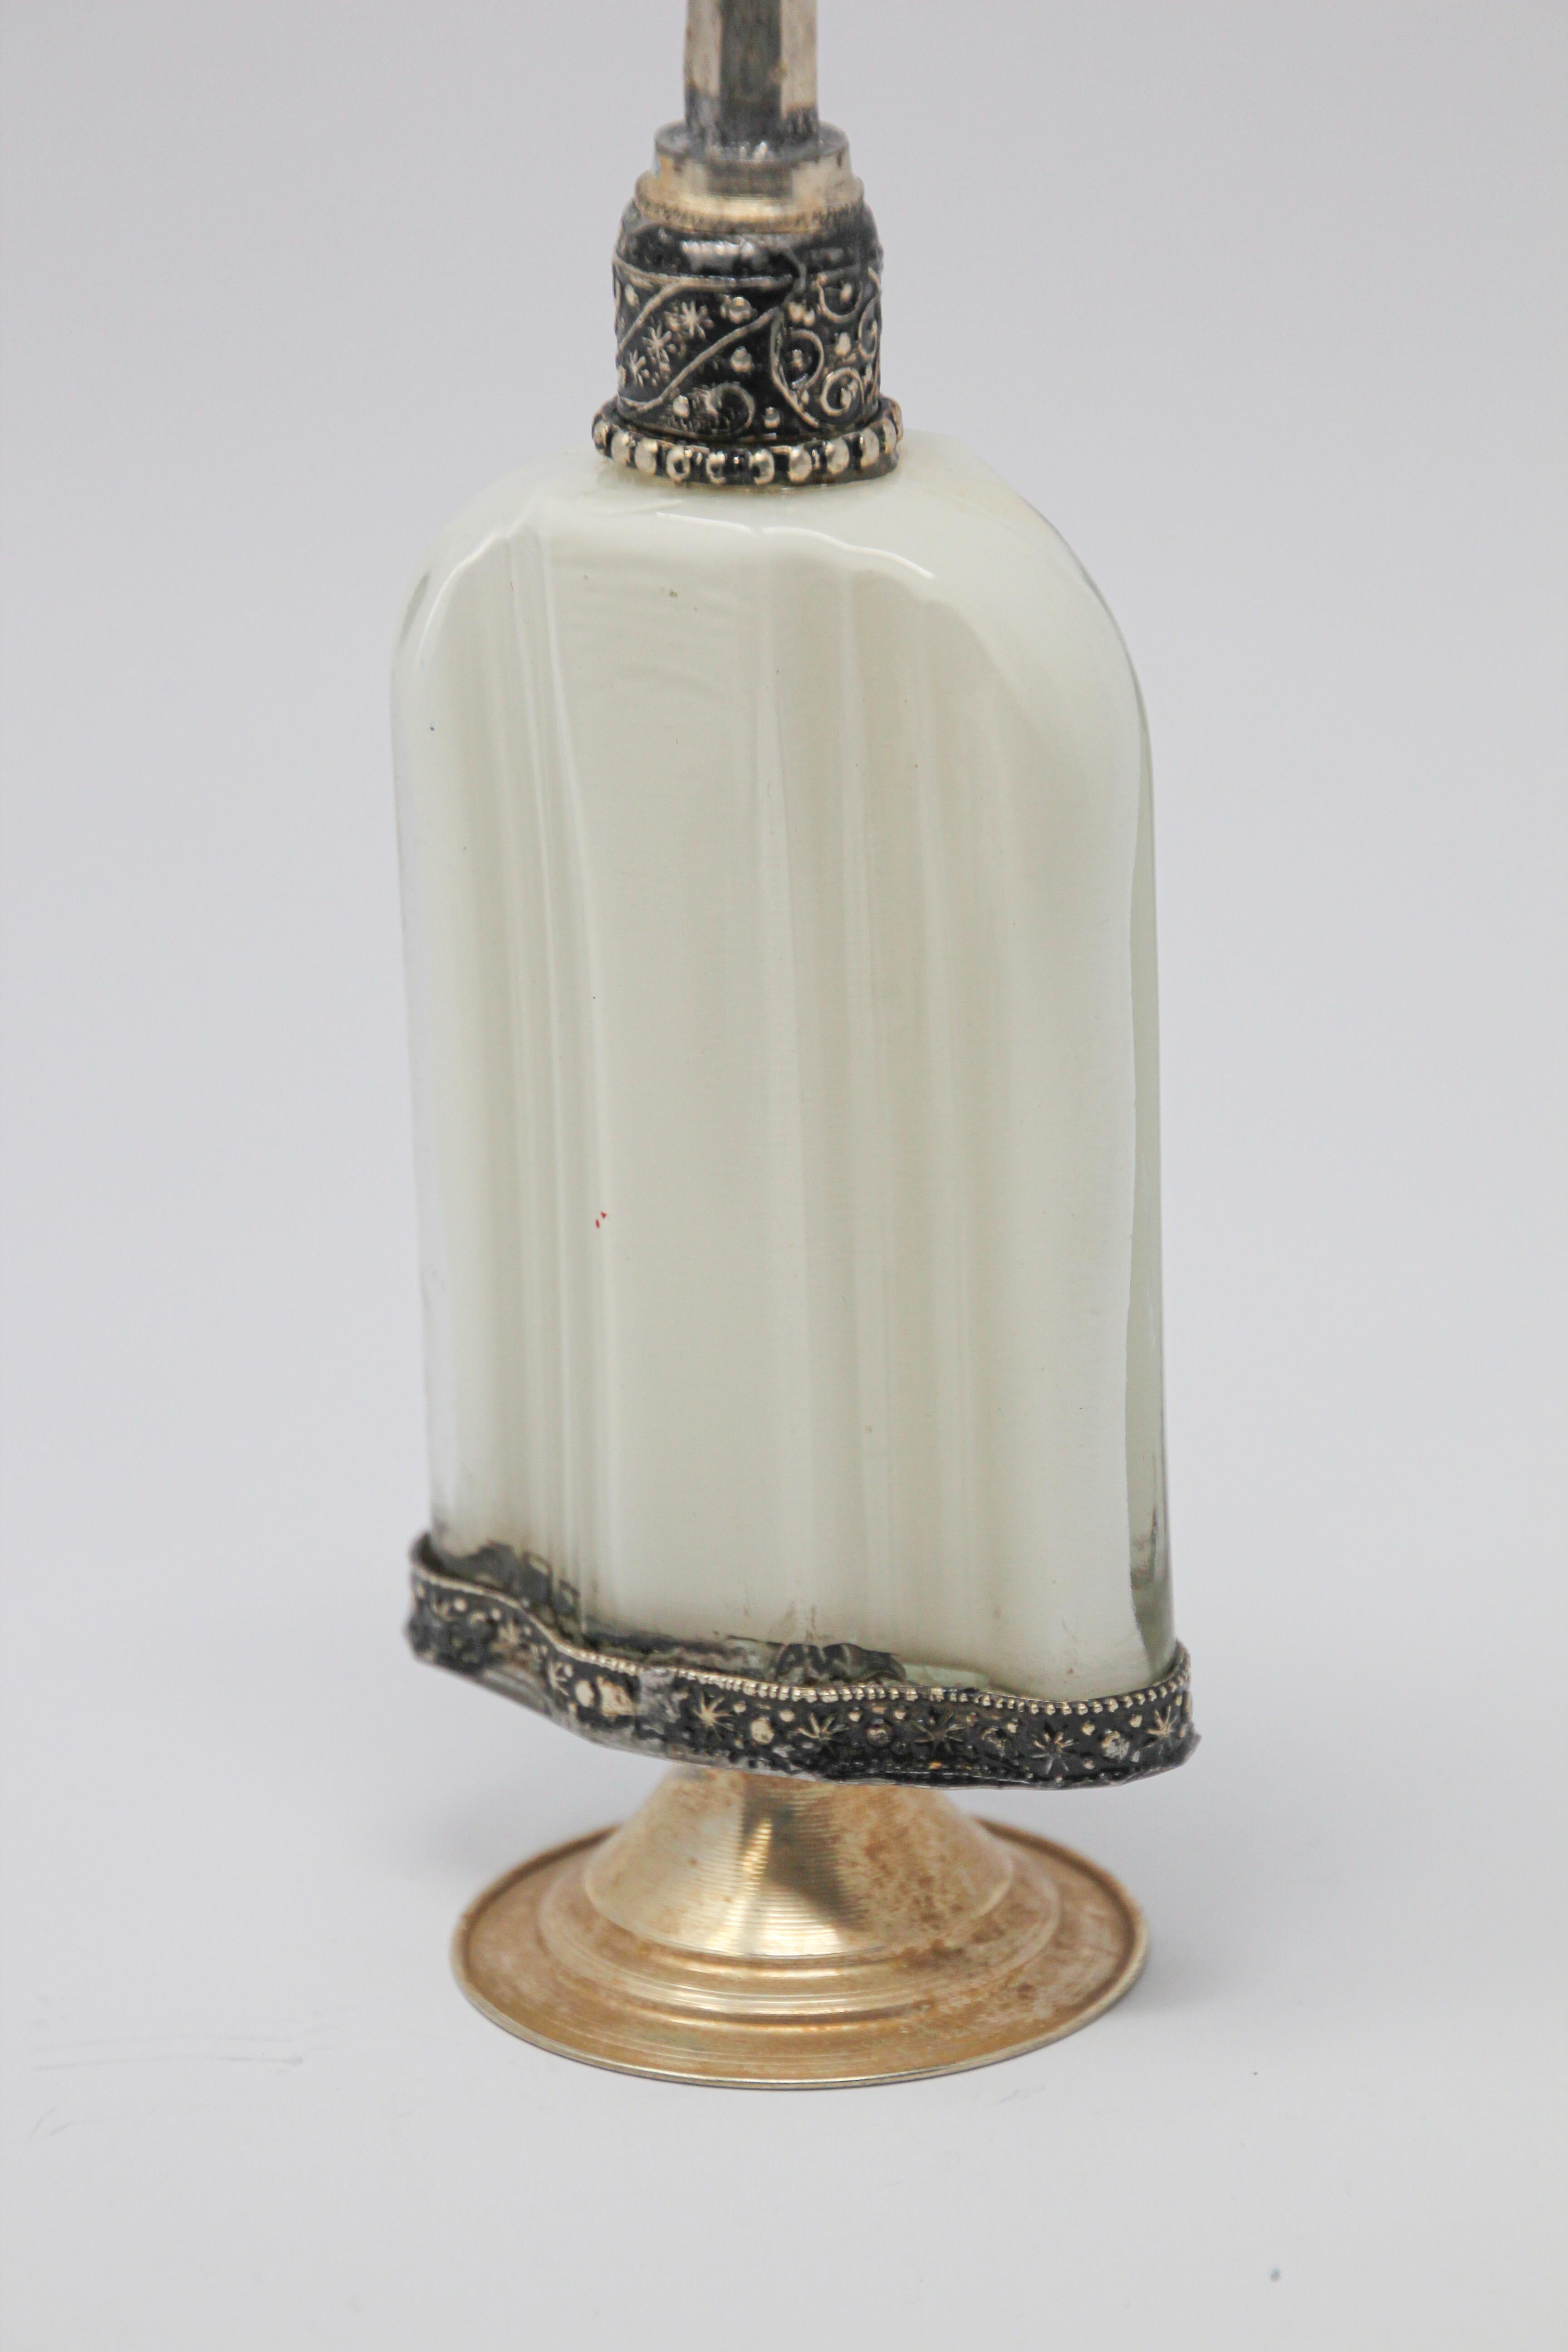 Hand-Crafted Moorish Decorative Glass Perfume Bottle Sprinkler with Embossed Metal Overlay